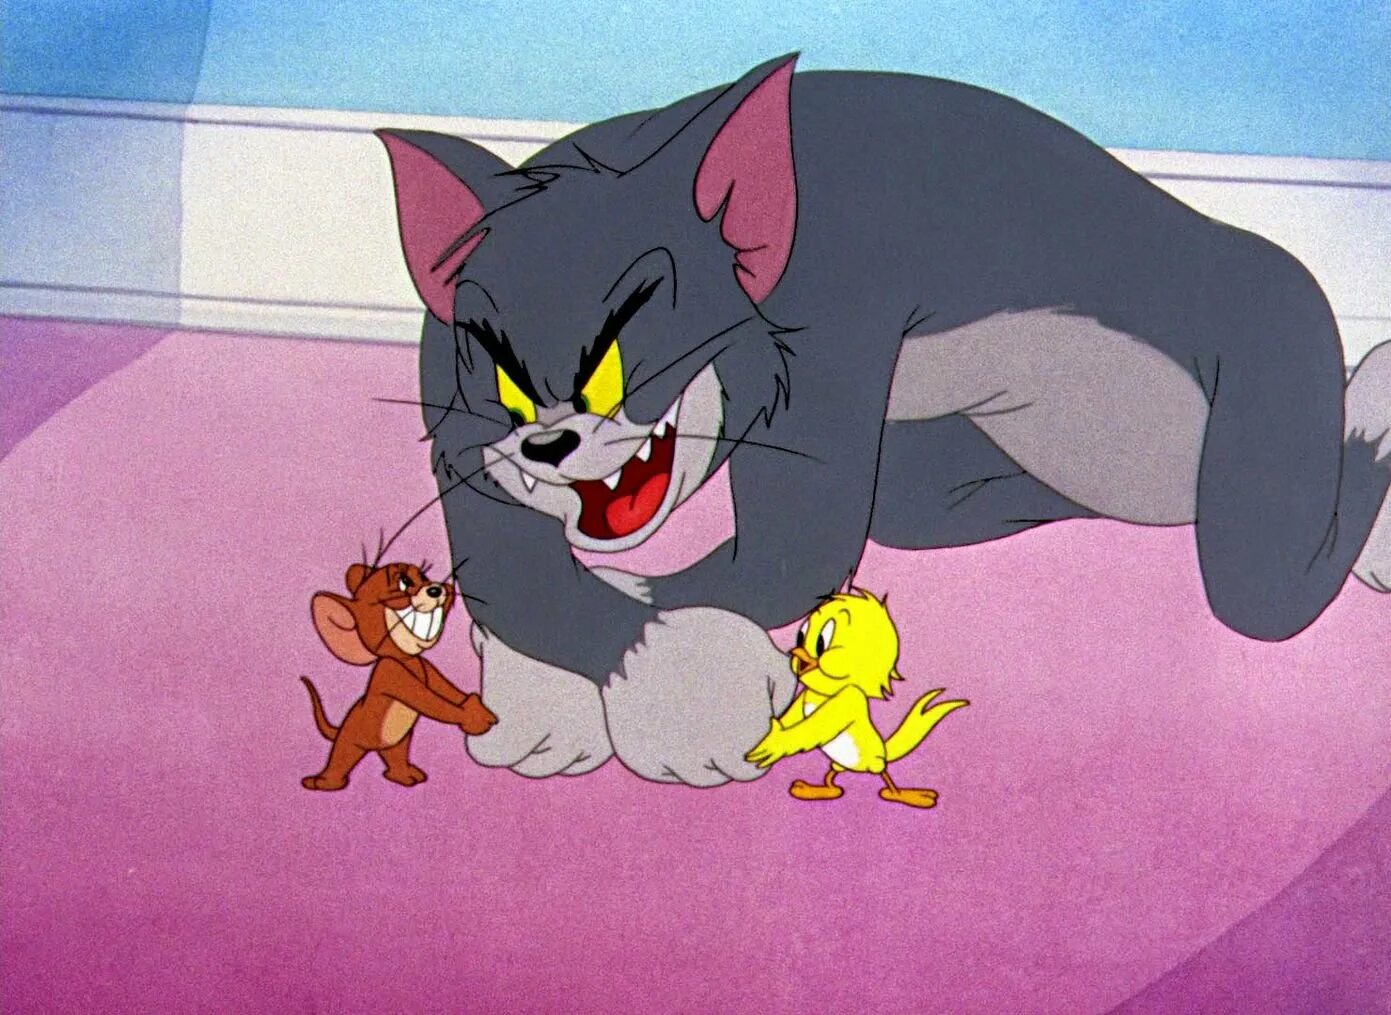 Jerry том и джерри. Том и Джерри 1960. Том и Джерри Джерри. Том и Джерри Tom and Jerry.